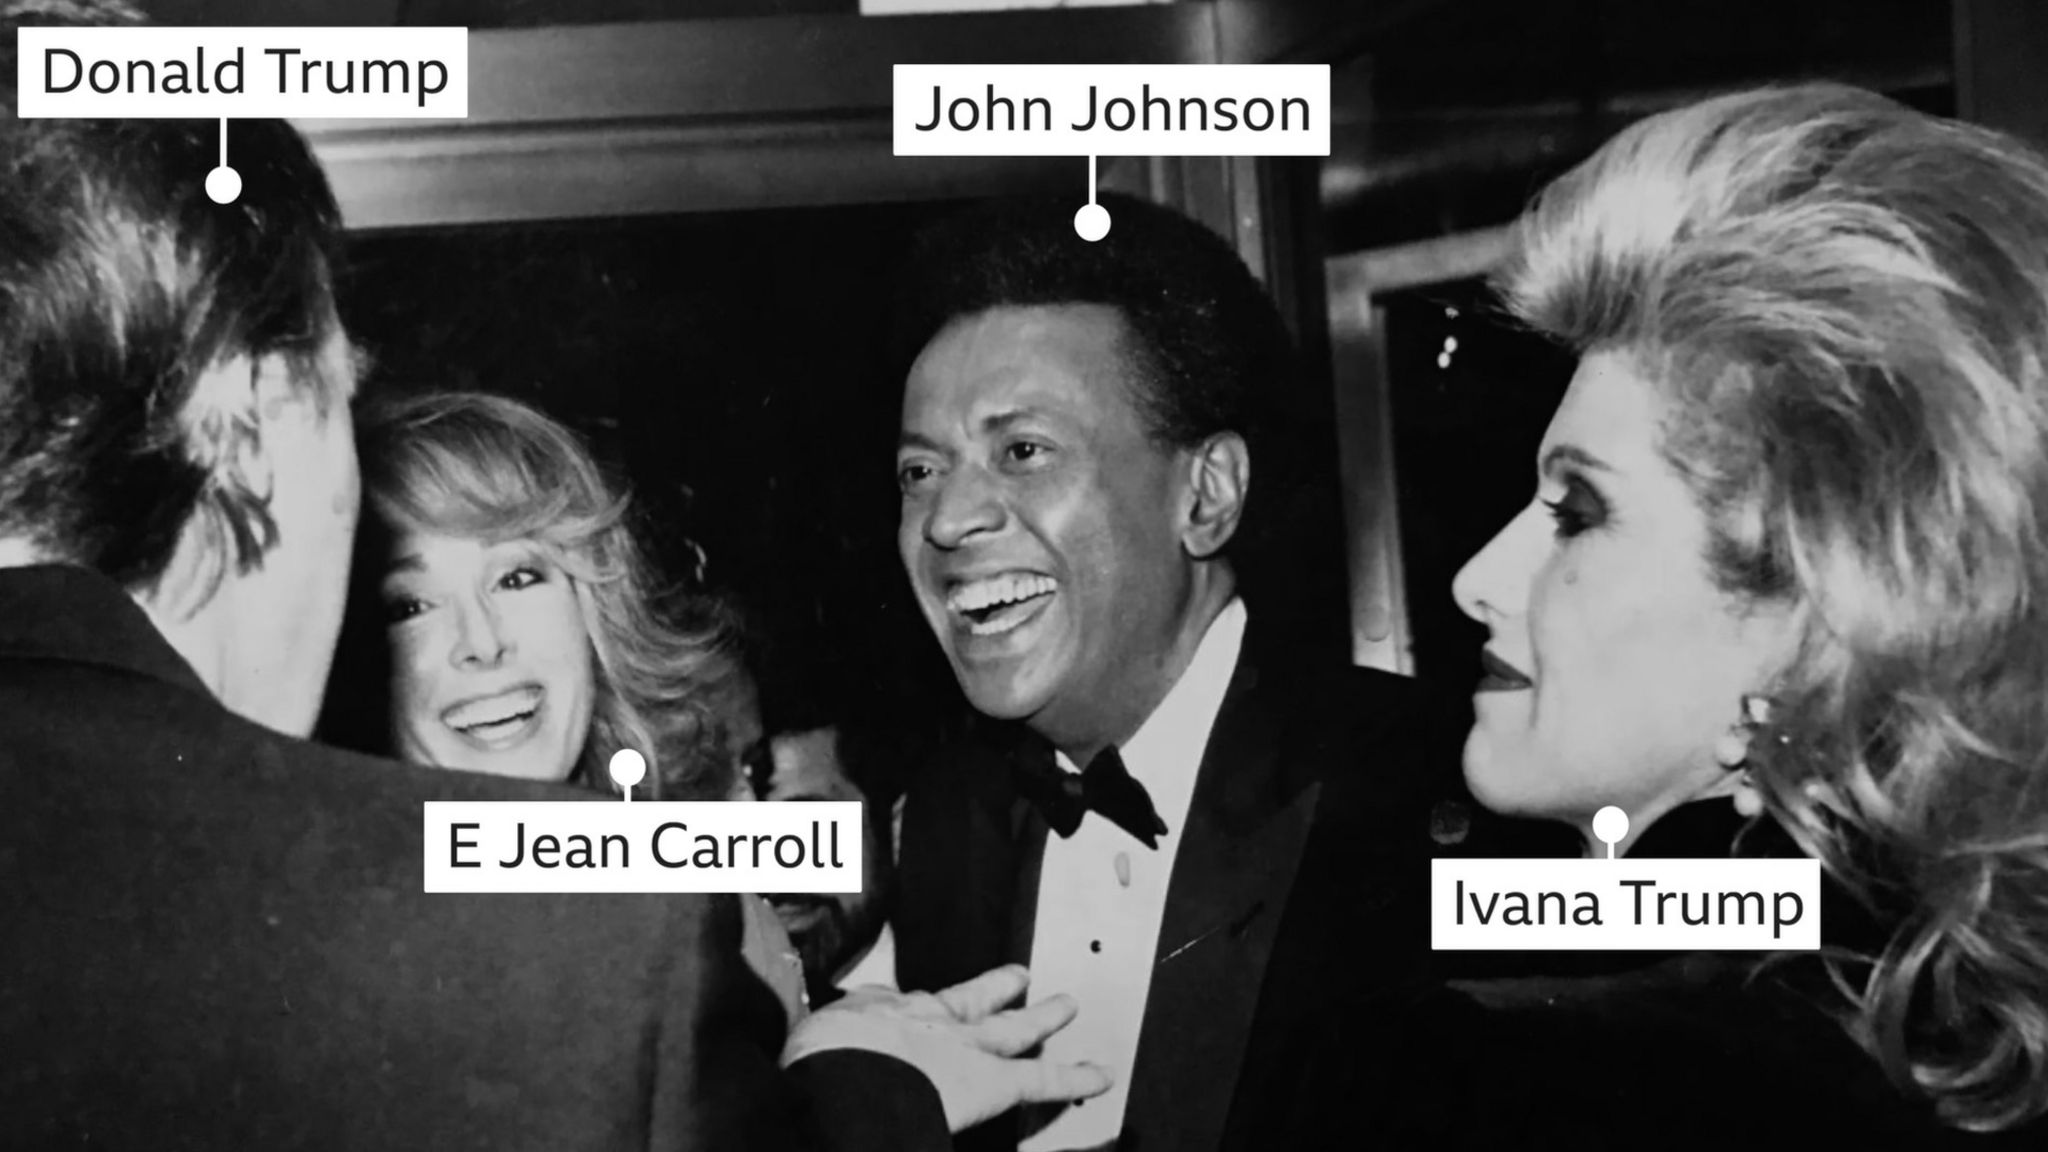 E Jean Carroll, Donald Trump, Ivana Trump and John Johnson in the photograph